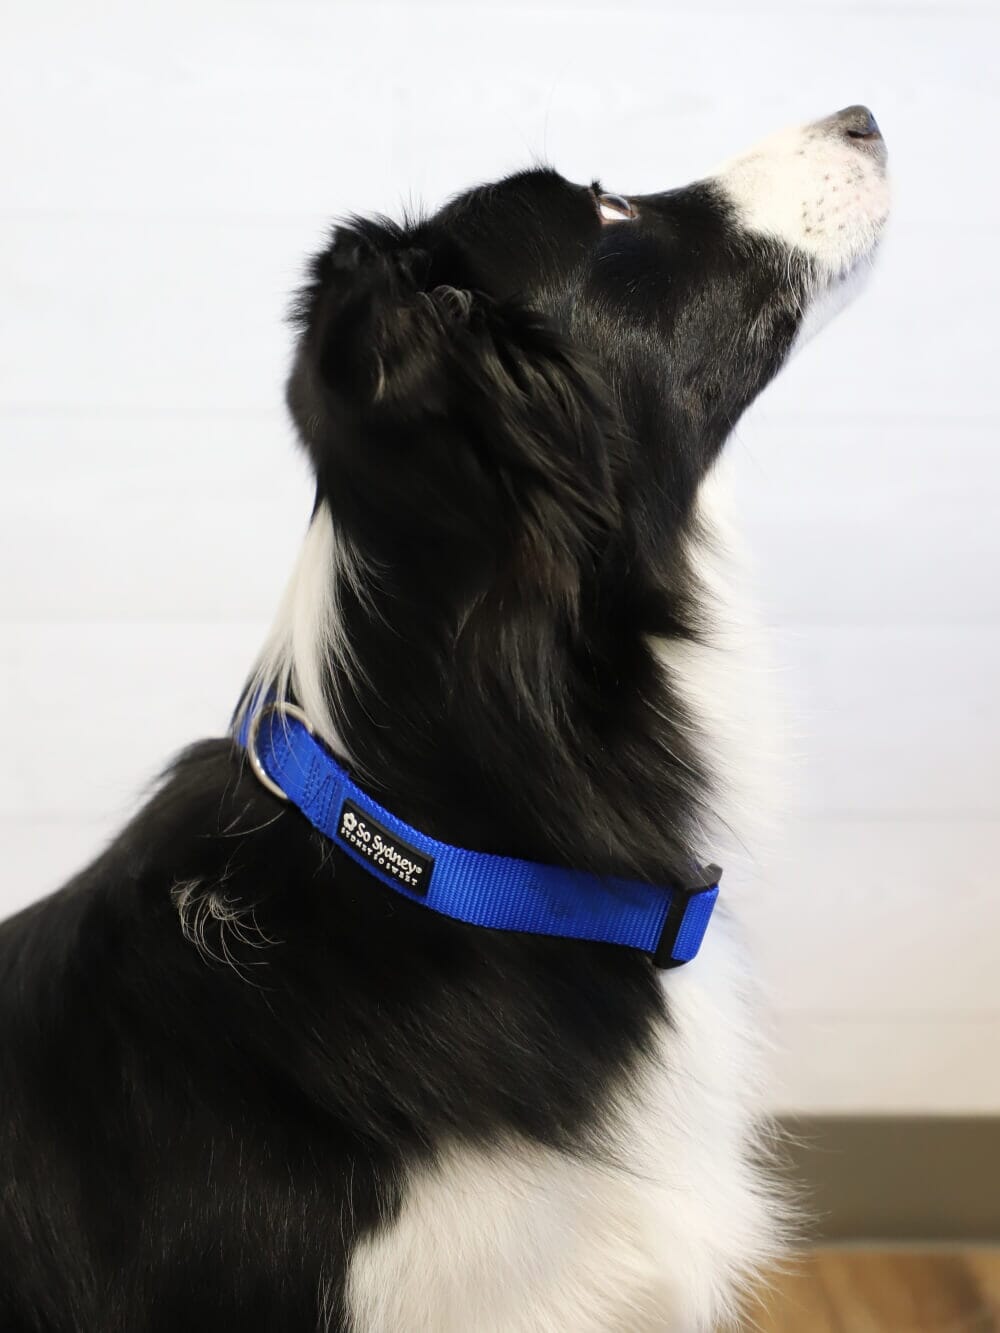 Royal Blue Adjustable Nylon Dog Collar for Small, Medium, or Large Dogs - Sydney So Sweet